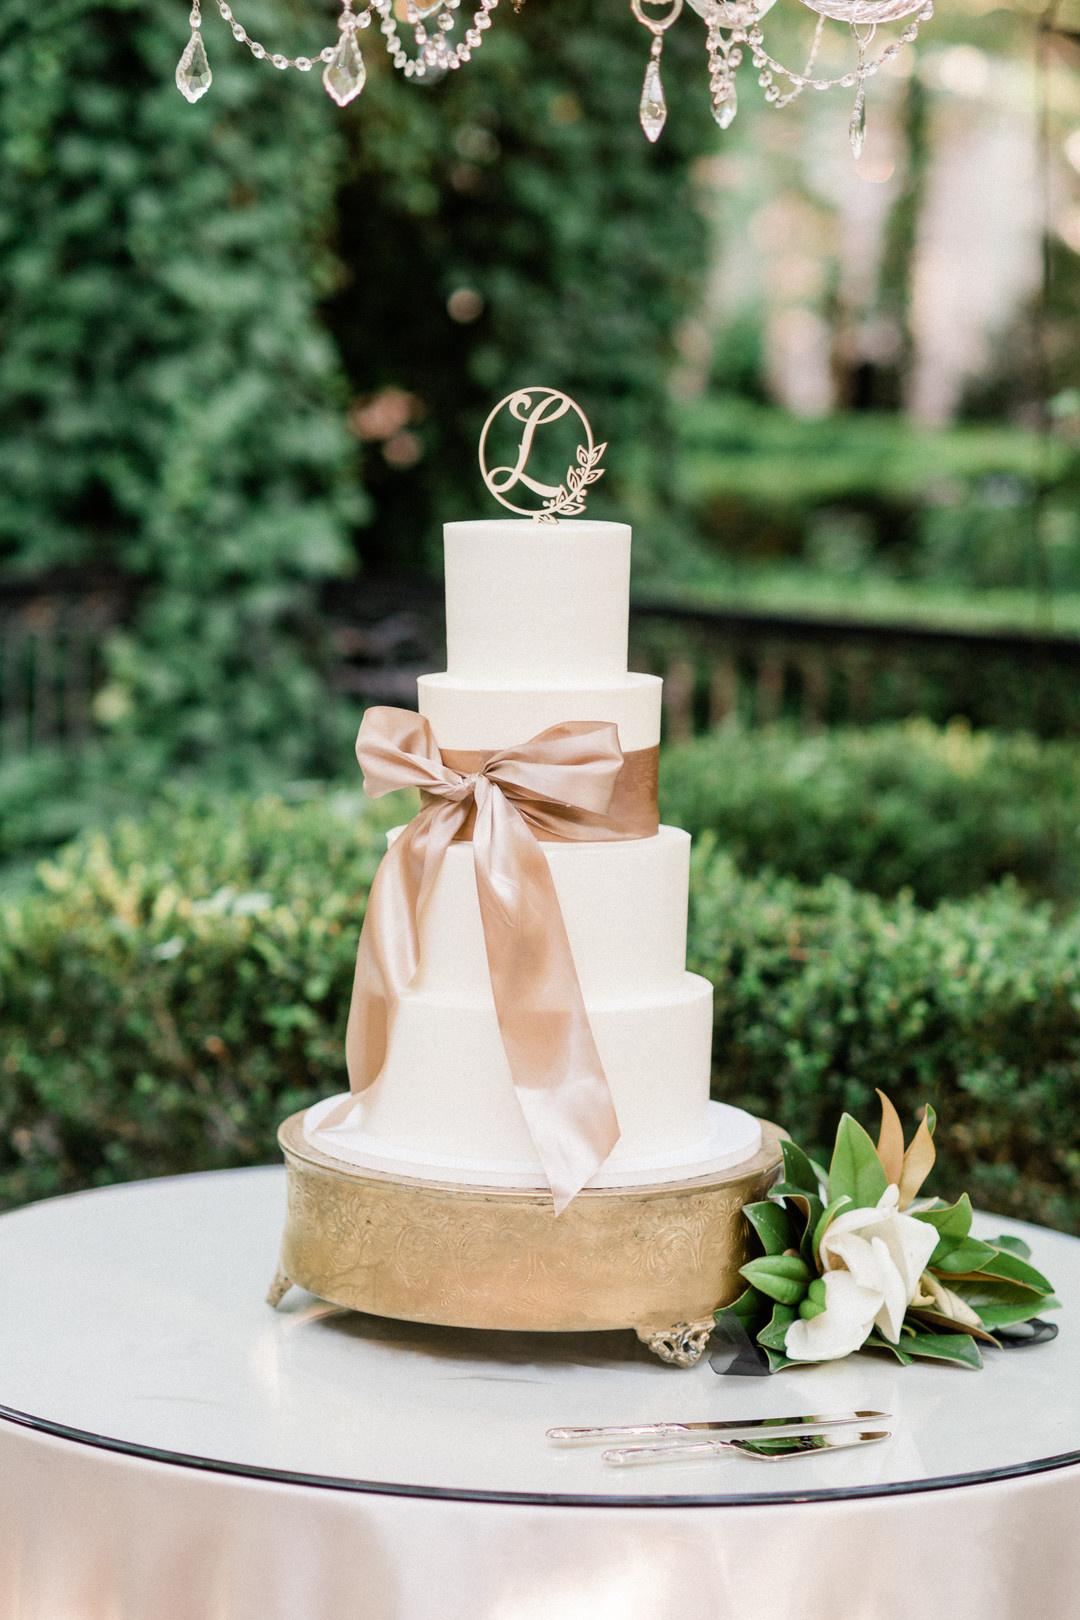 How To Make A Wedding Cake + Video Tutorial | Sugar Geek Show